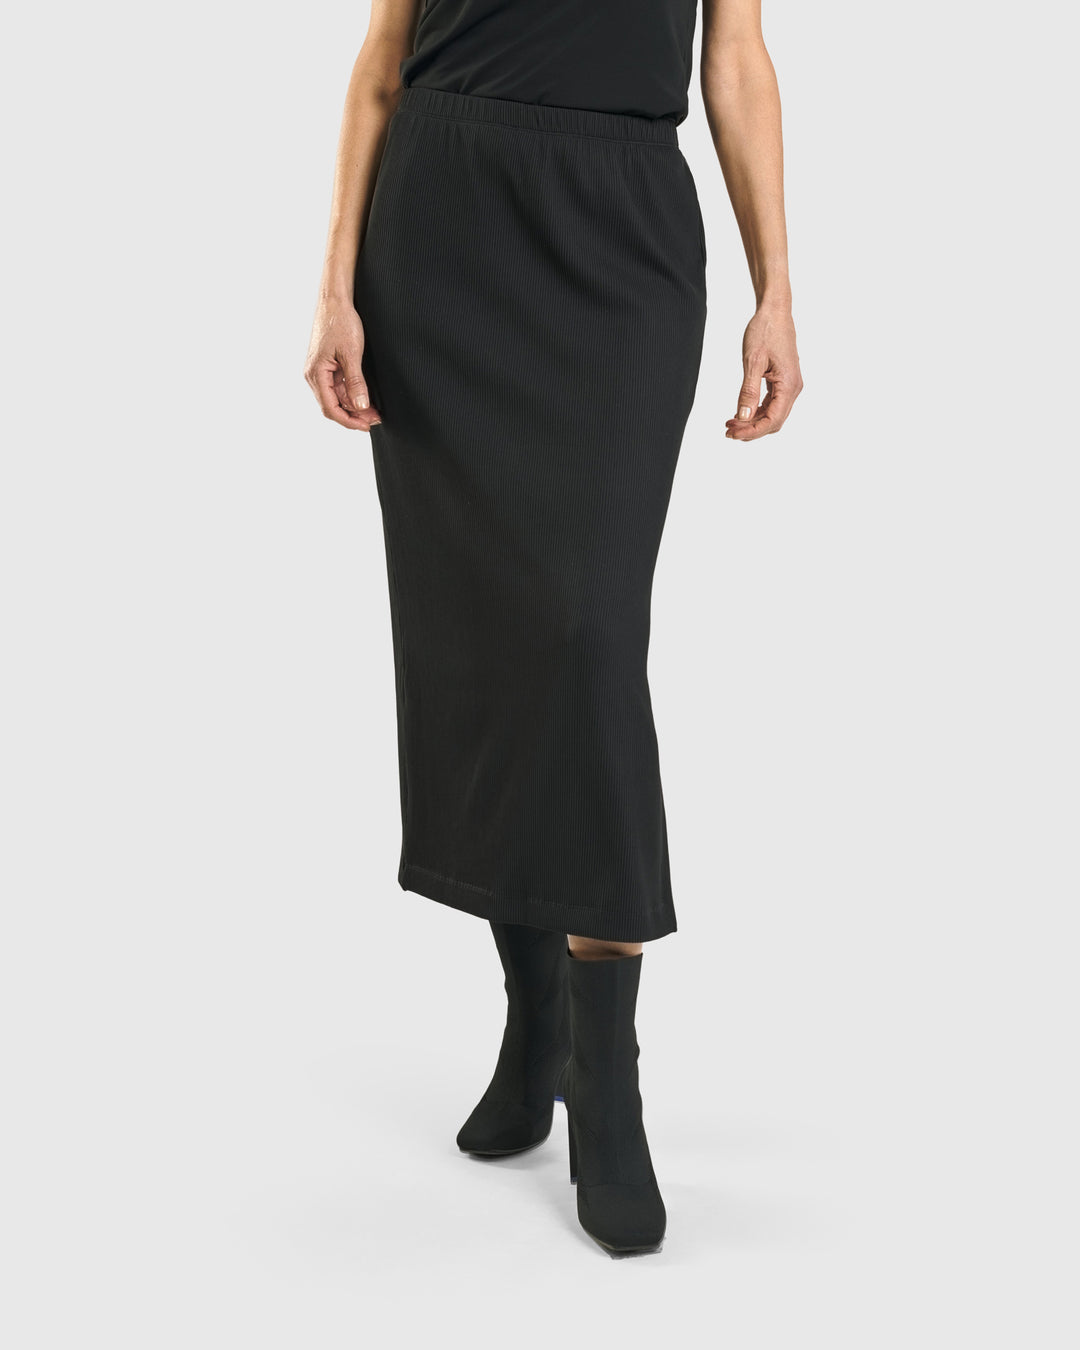 Goodfella Pencil Skirt, Black